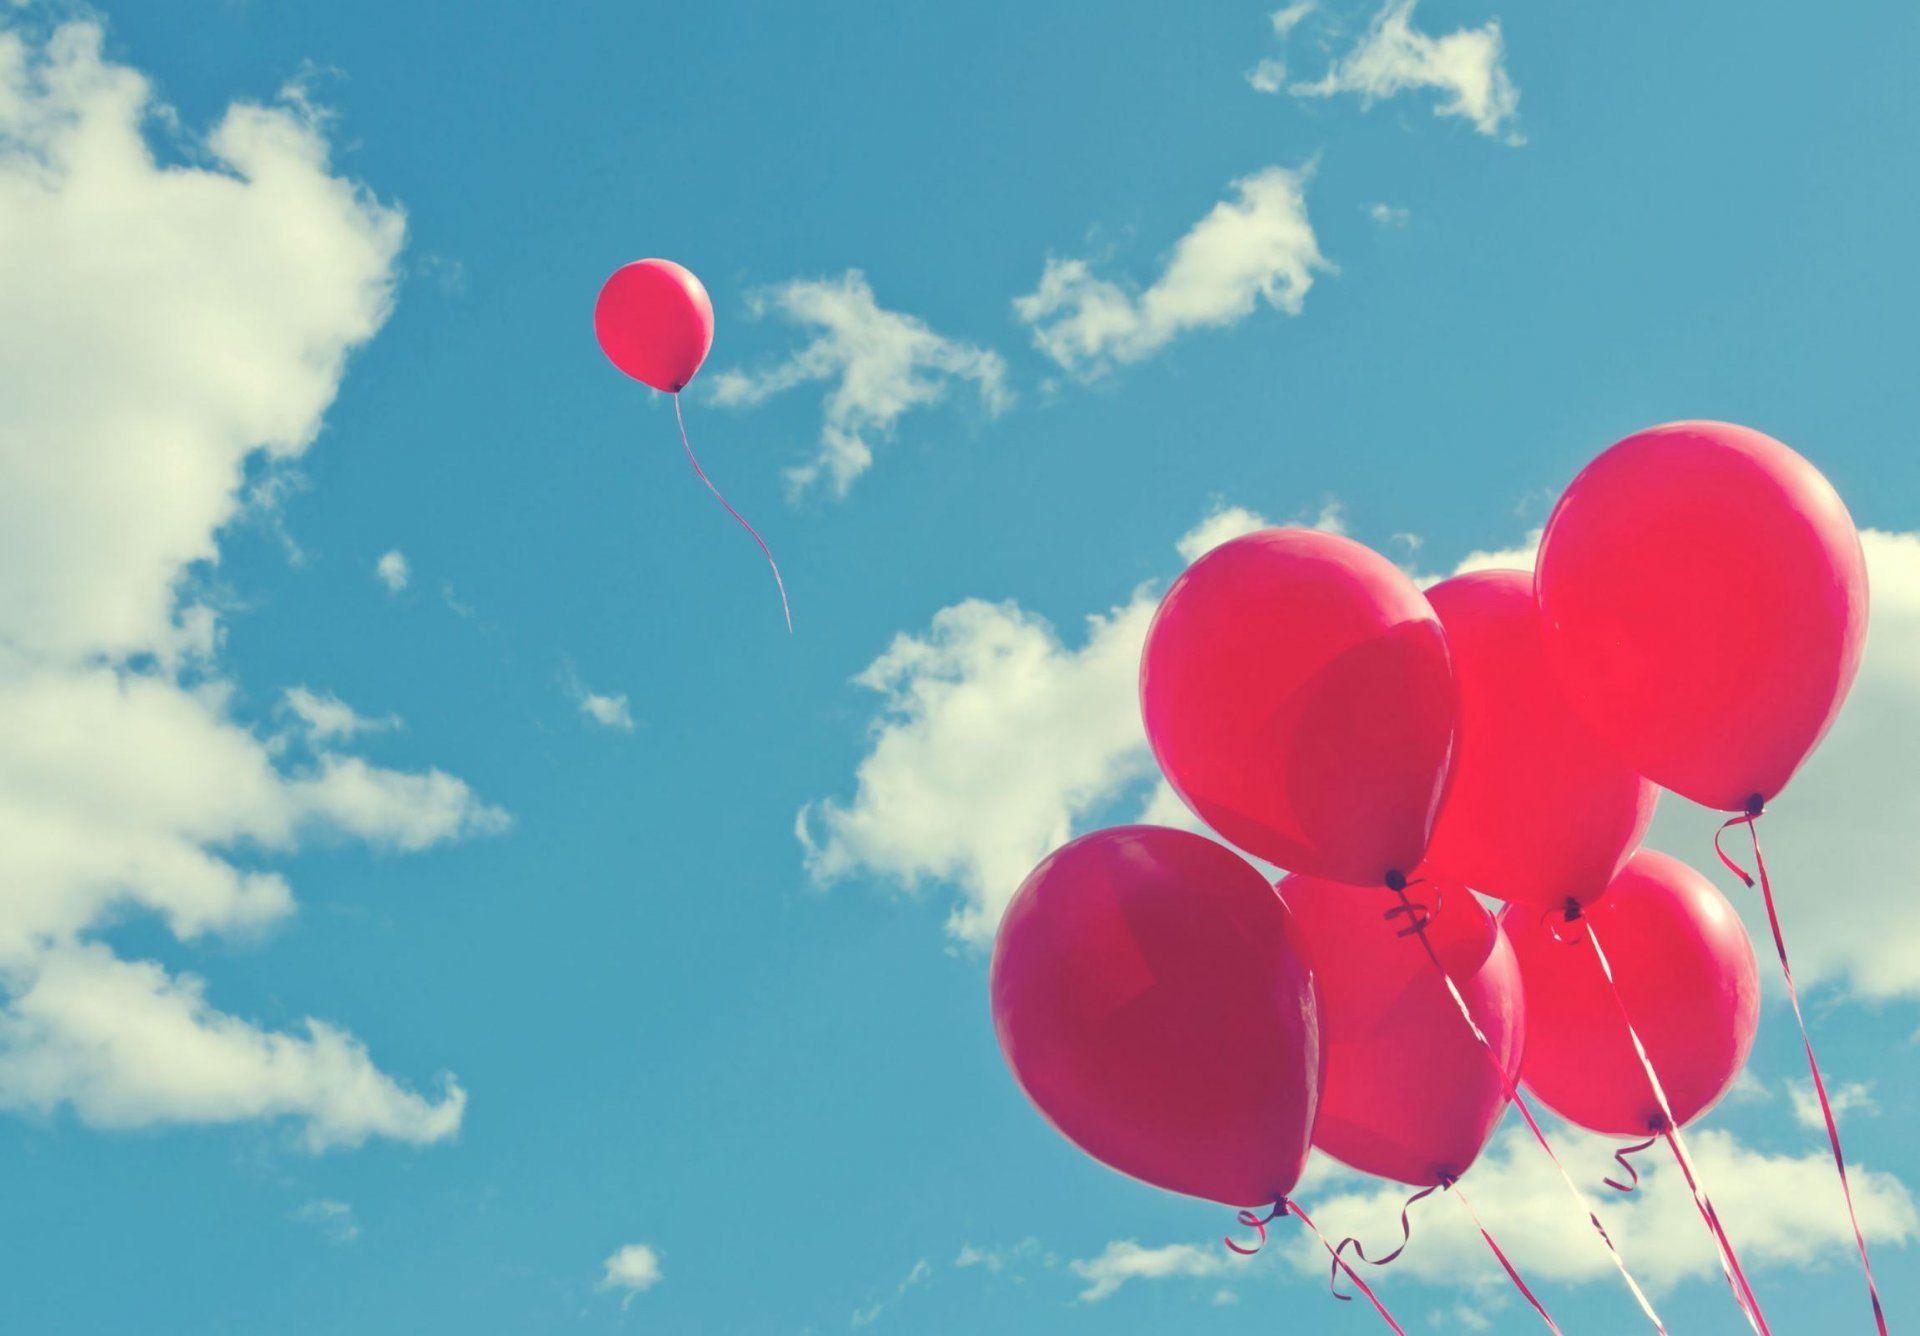 mood bulbs balls balloons pink sky clouds happiness holiday fun